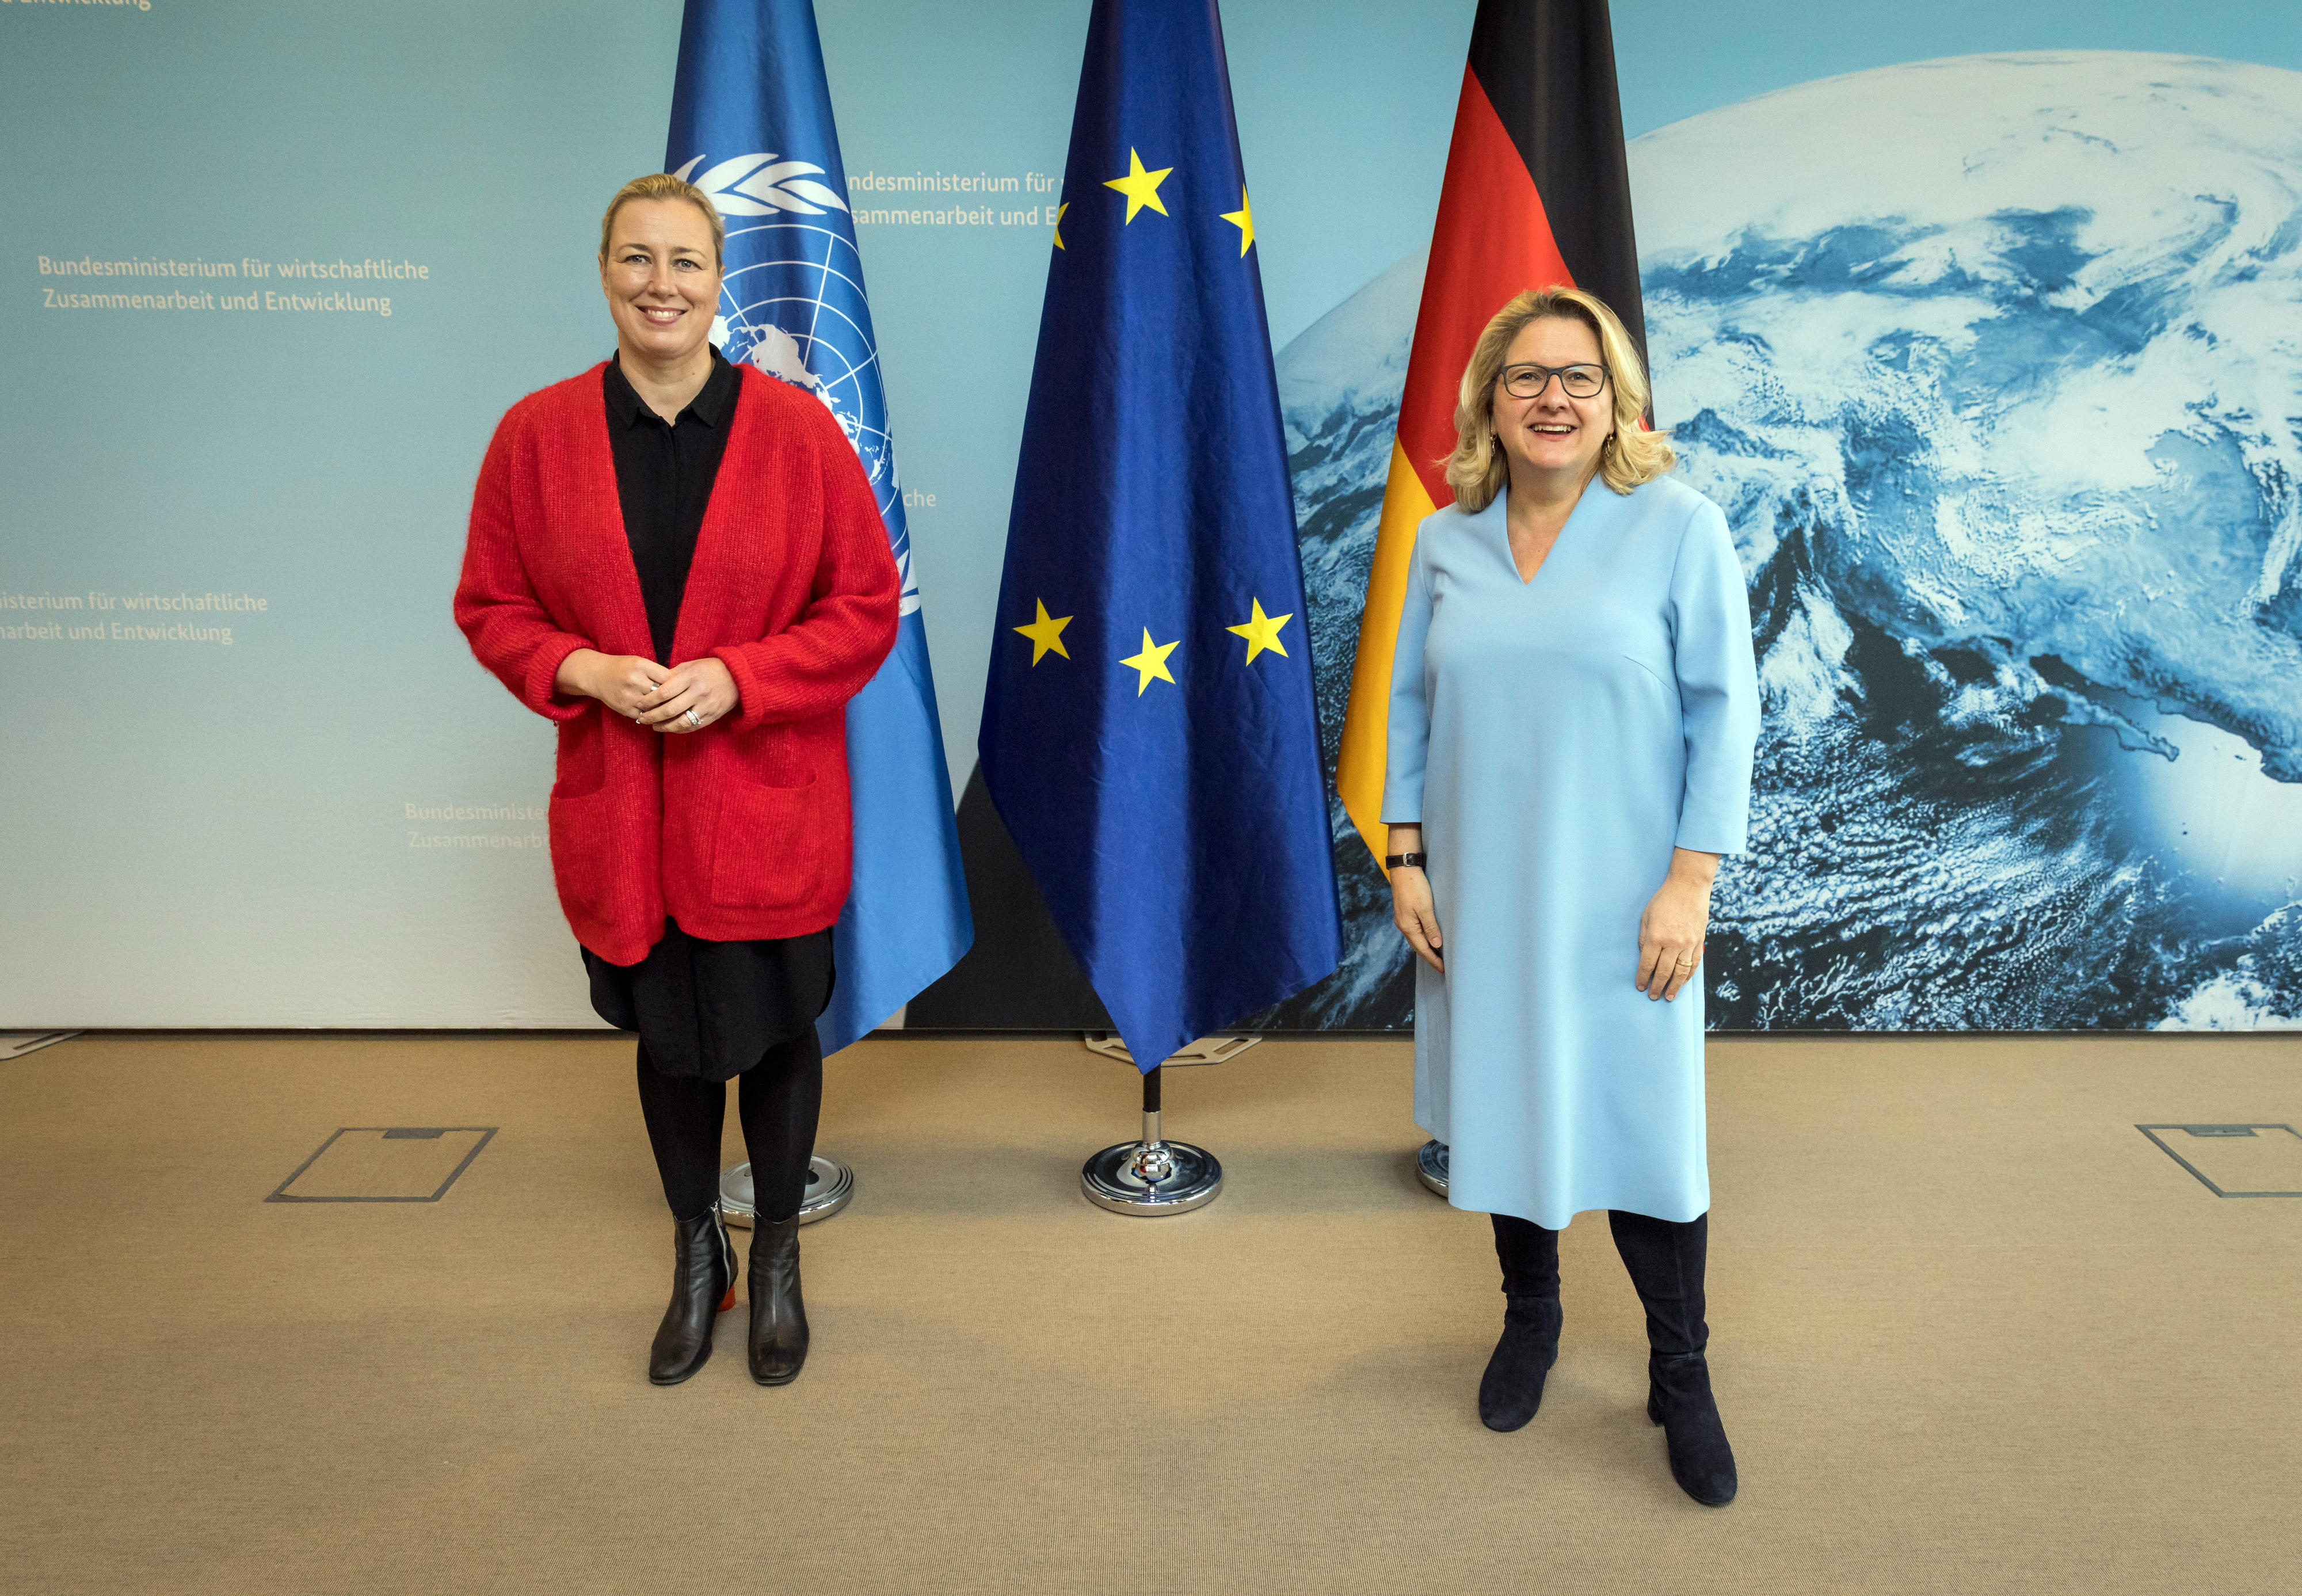 Federal Minister Svenja Schulze with Jutta Urpilainen, EU Commissioner for International Partnerships in Berlin in January 2022